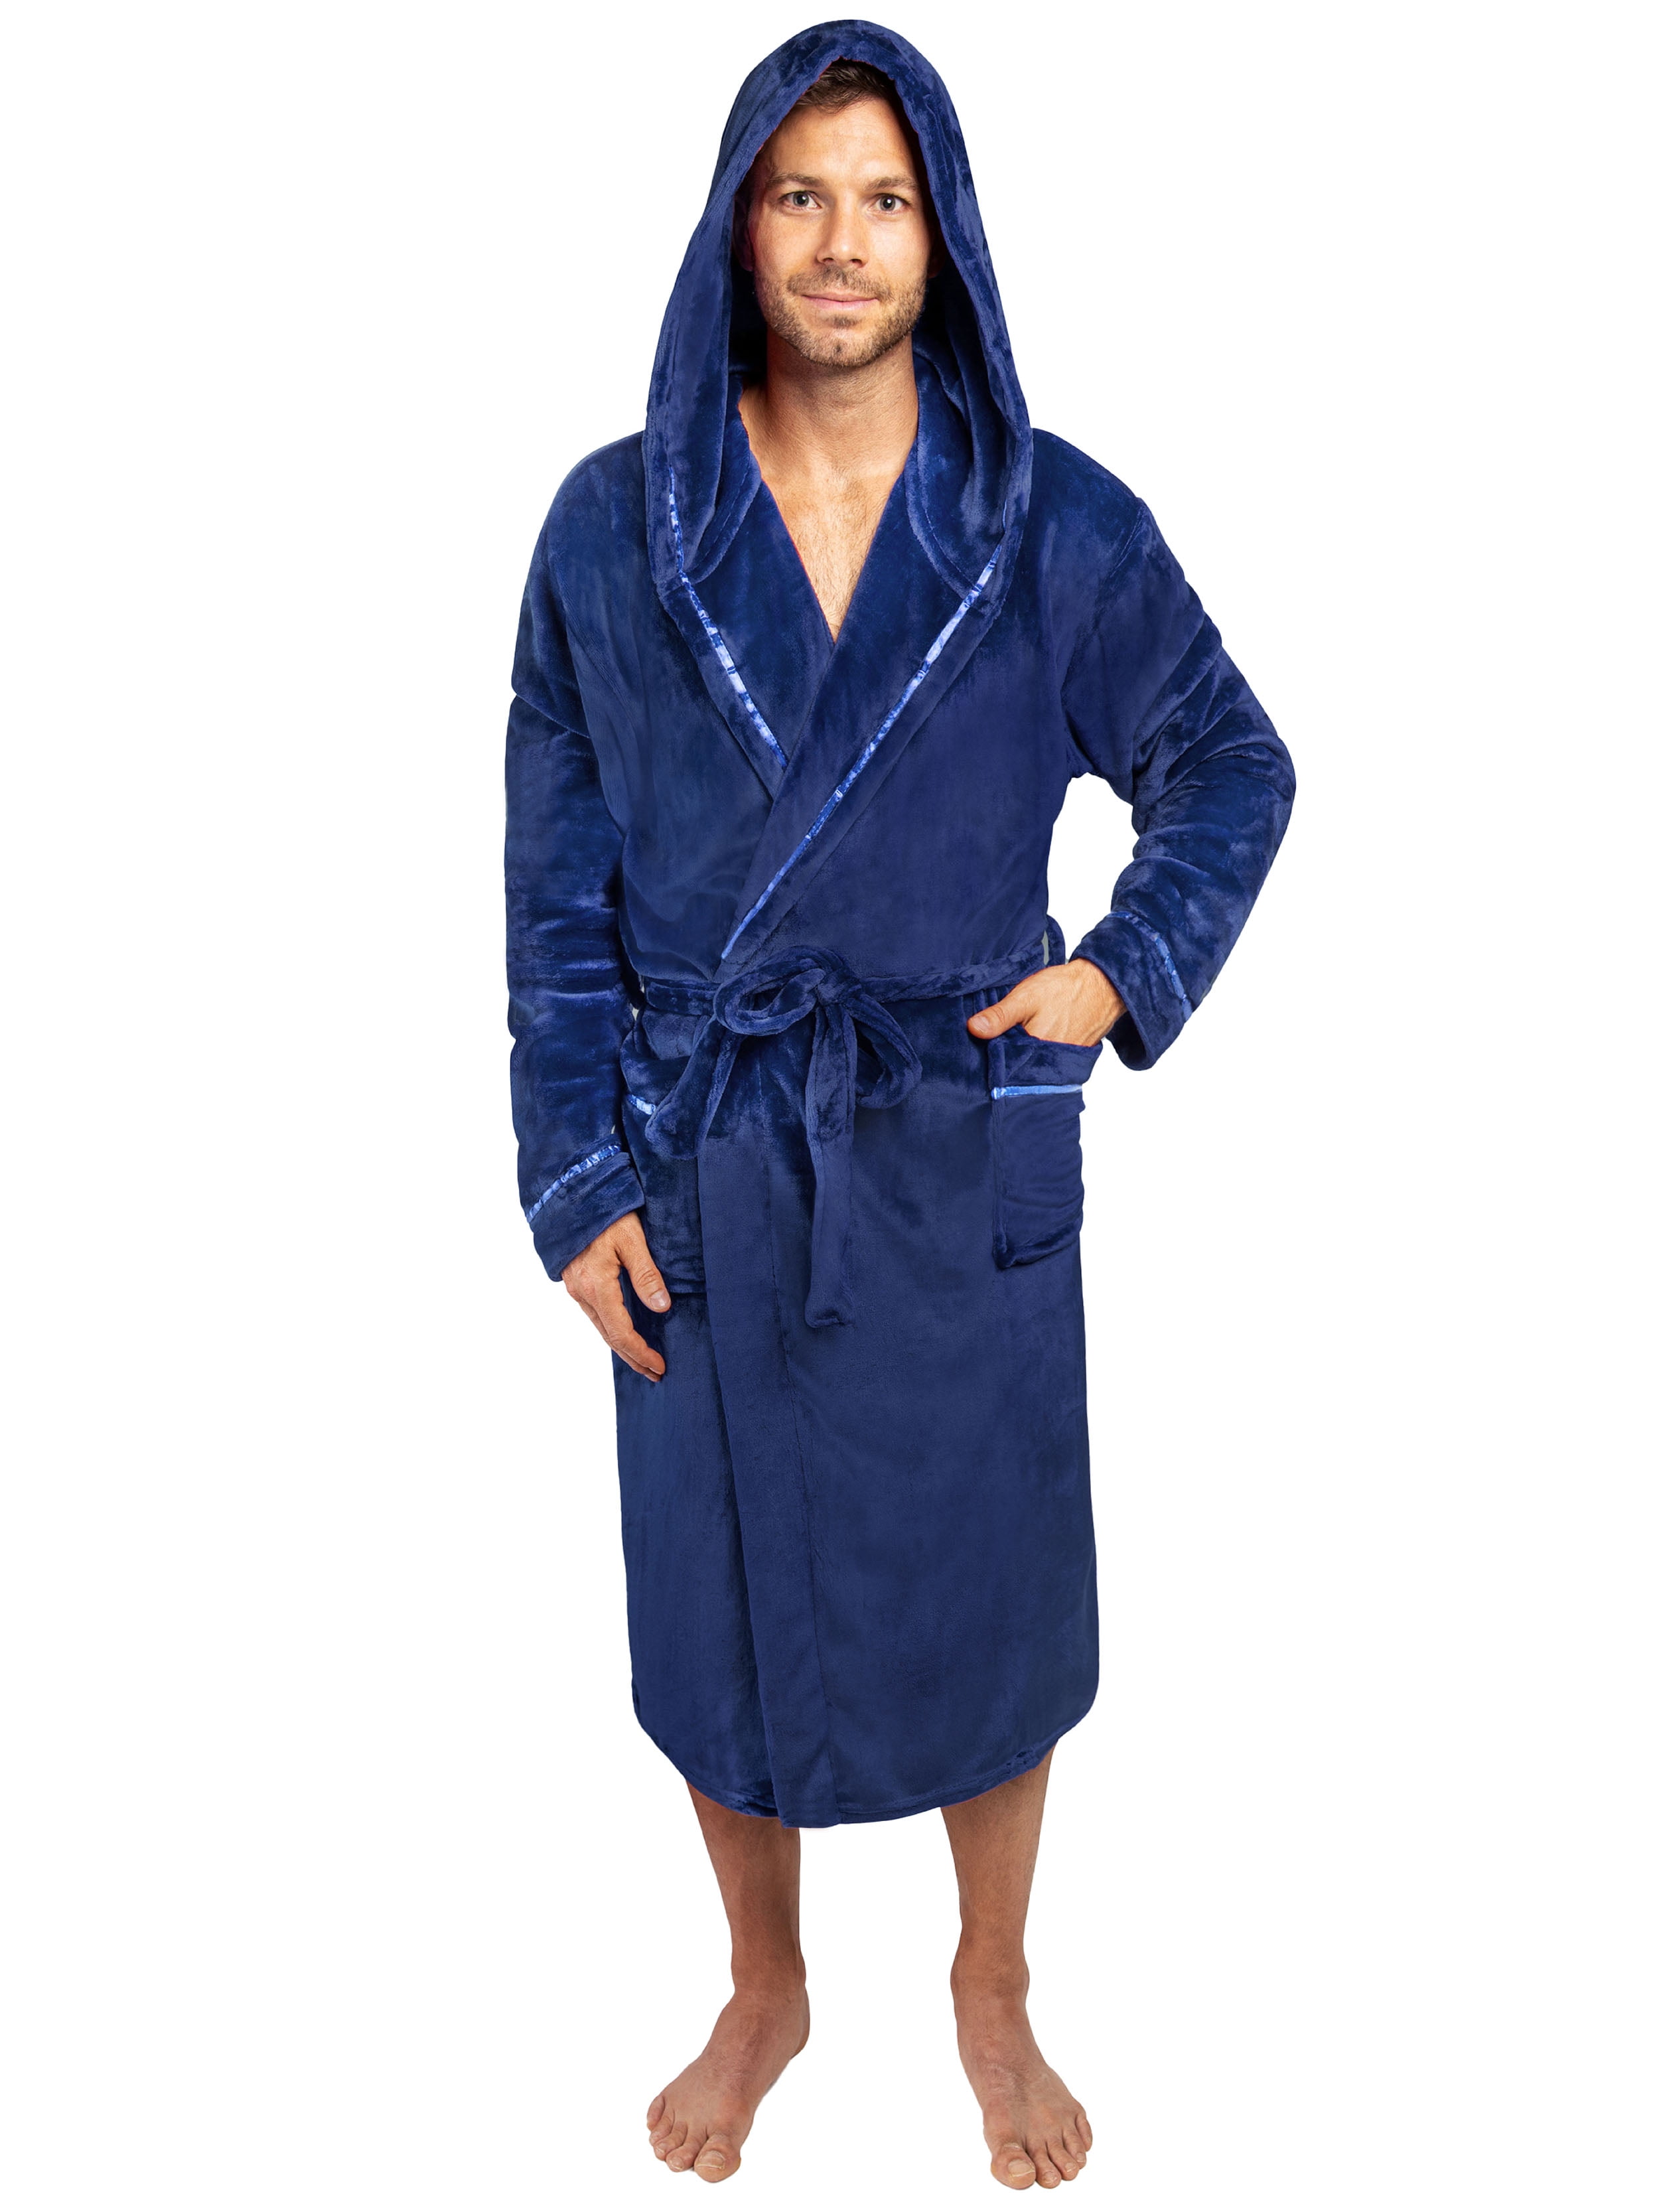 Mens Hooded Robe Full Length Long Plush Shawl Kimono Bathrobe Warm Soft Home Clothes with Belt Nightwear Sleepwear